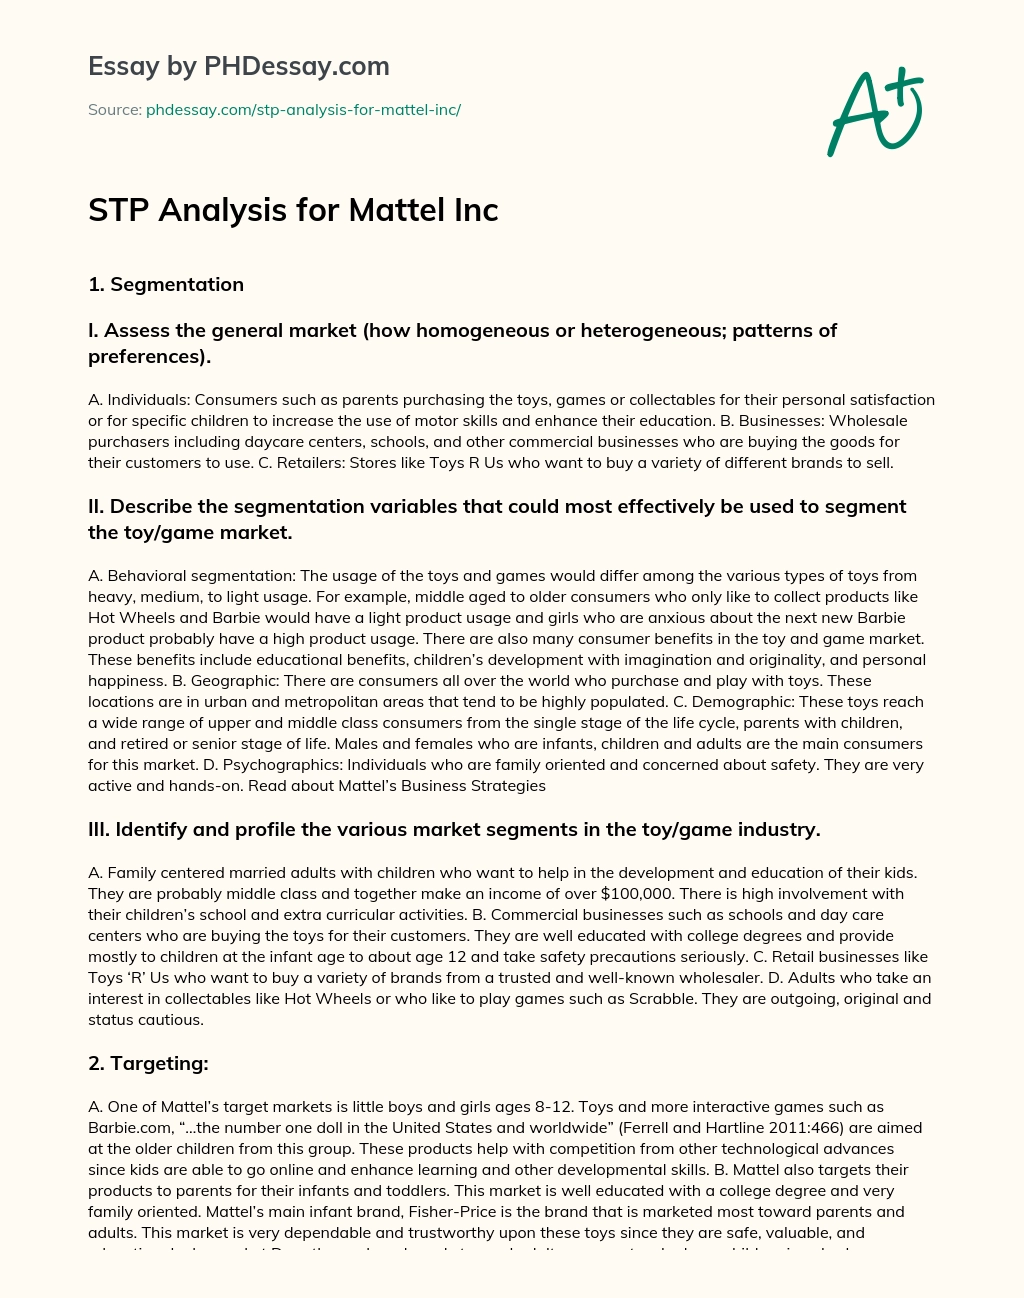 STP Analysis for Mattel Inc essay